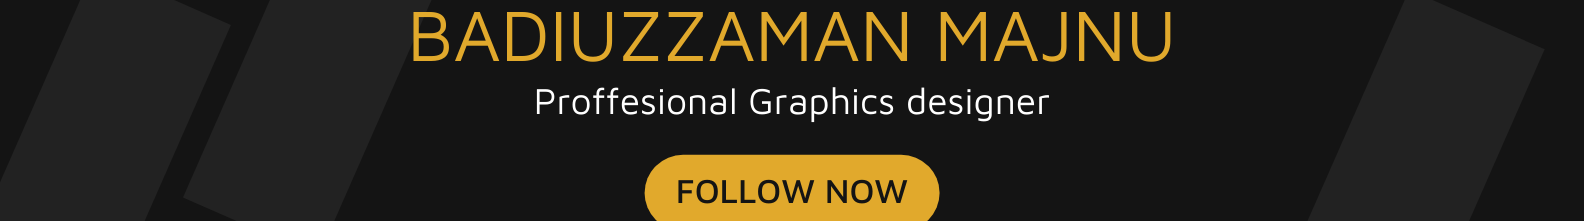 Badiuzzaman Majnu's profile banner